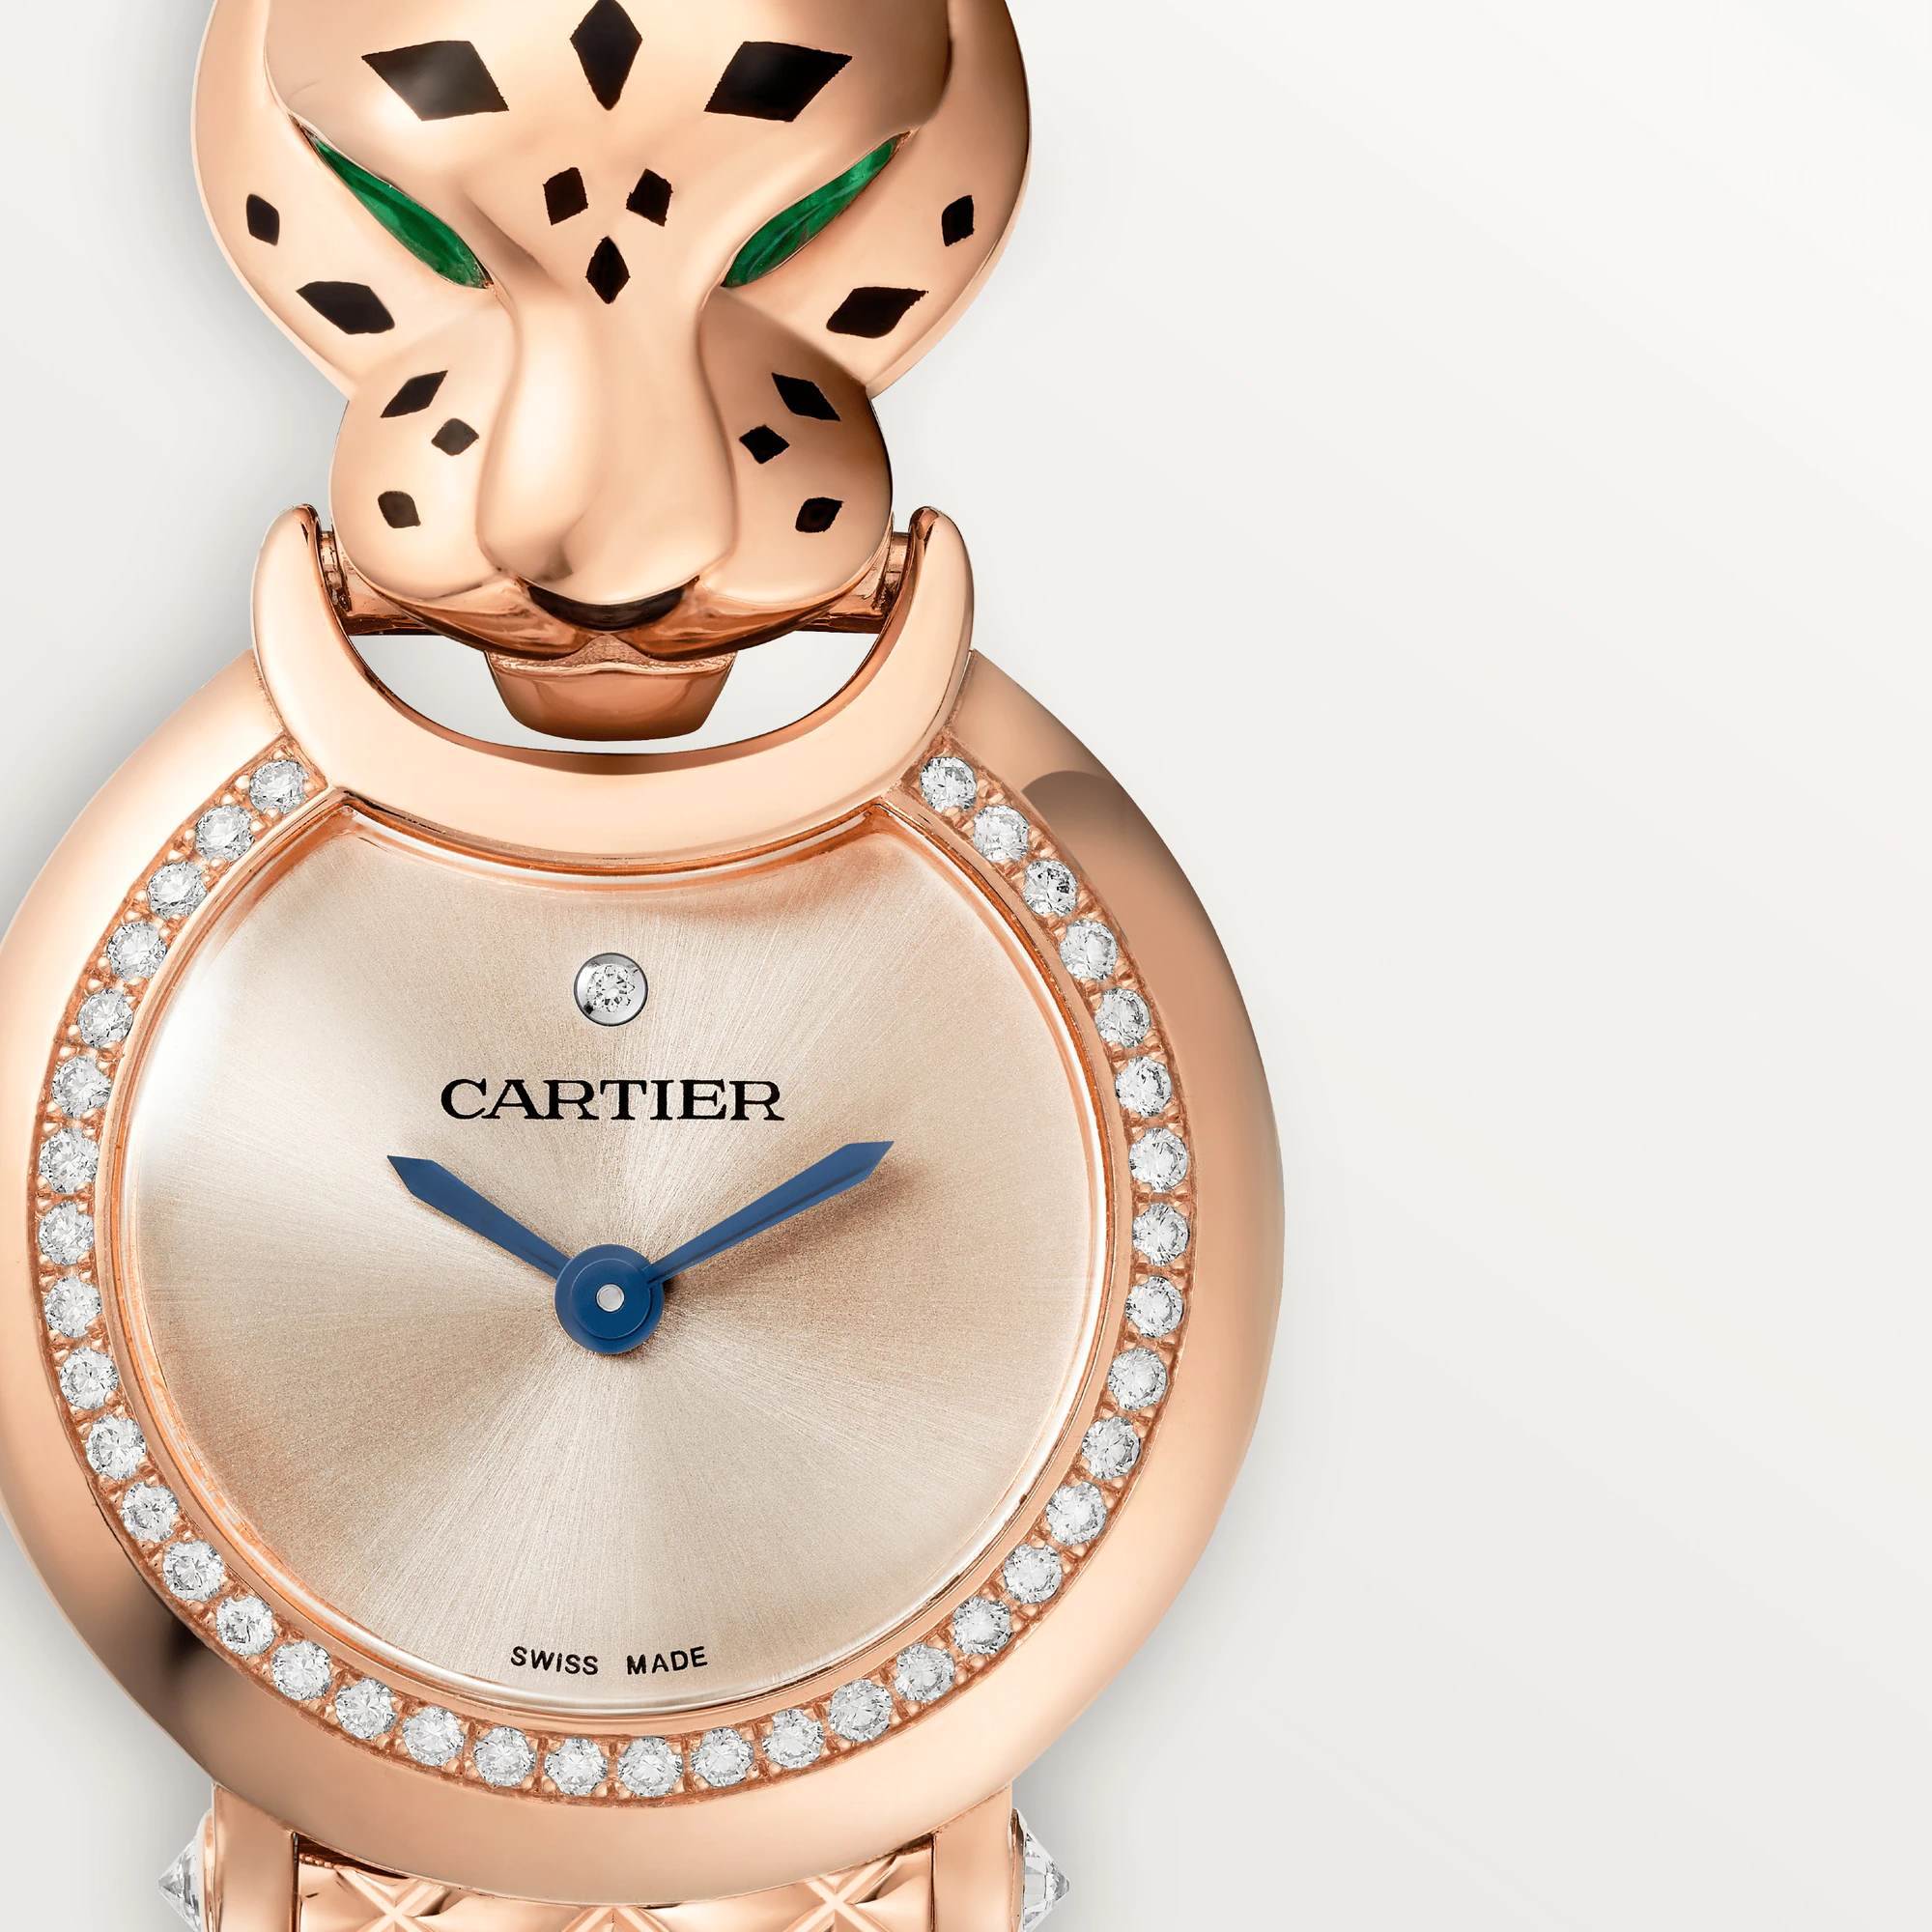 Cartier Panthère 18K Rose Gold & Diamonds Ladies Watch